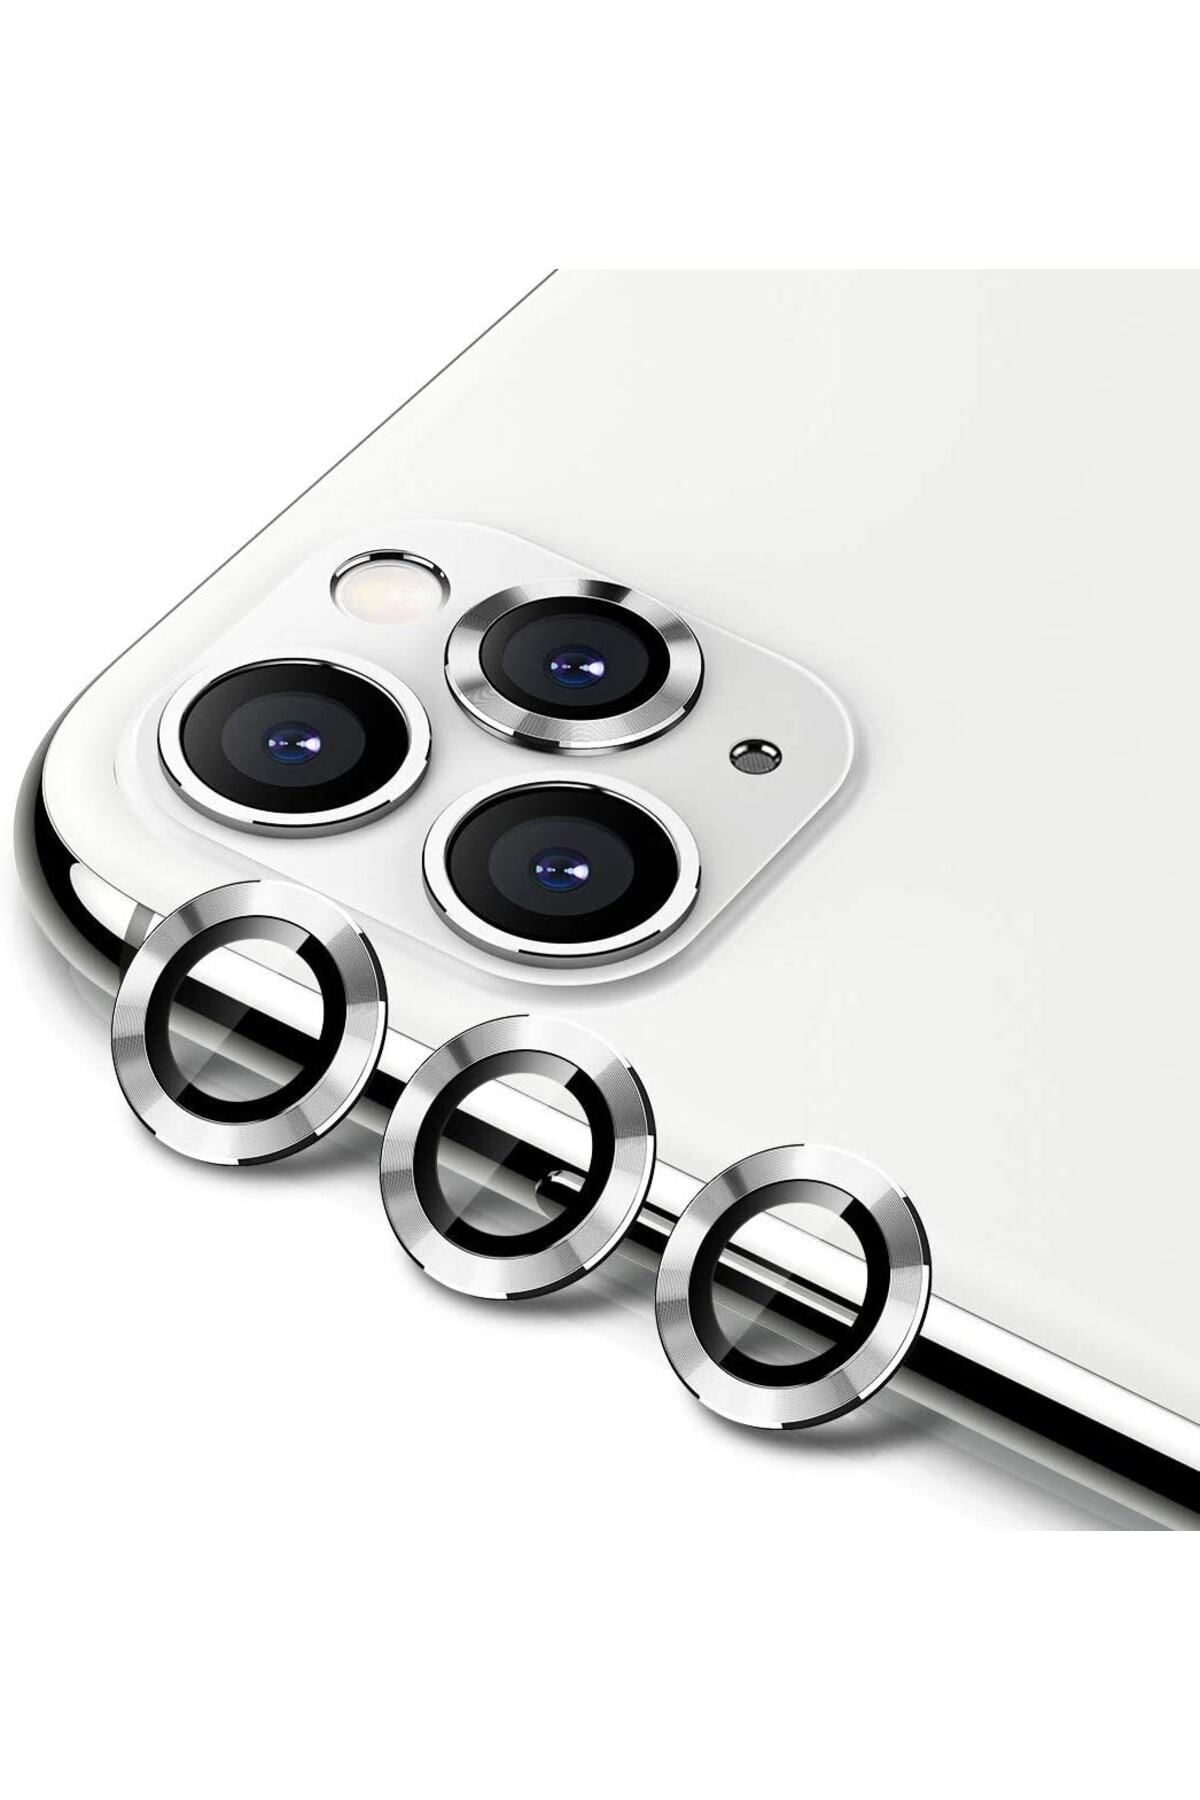 aheaks Apple Iphone 11 Pro / Iphone 11 Pro Max Kamera Koruyucu Lens - Hd Kalite